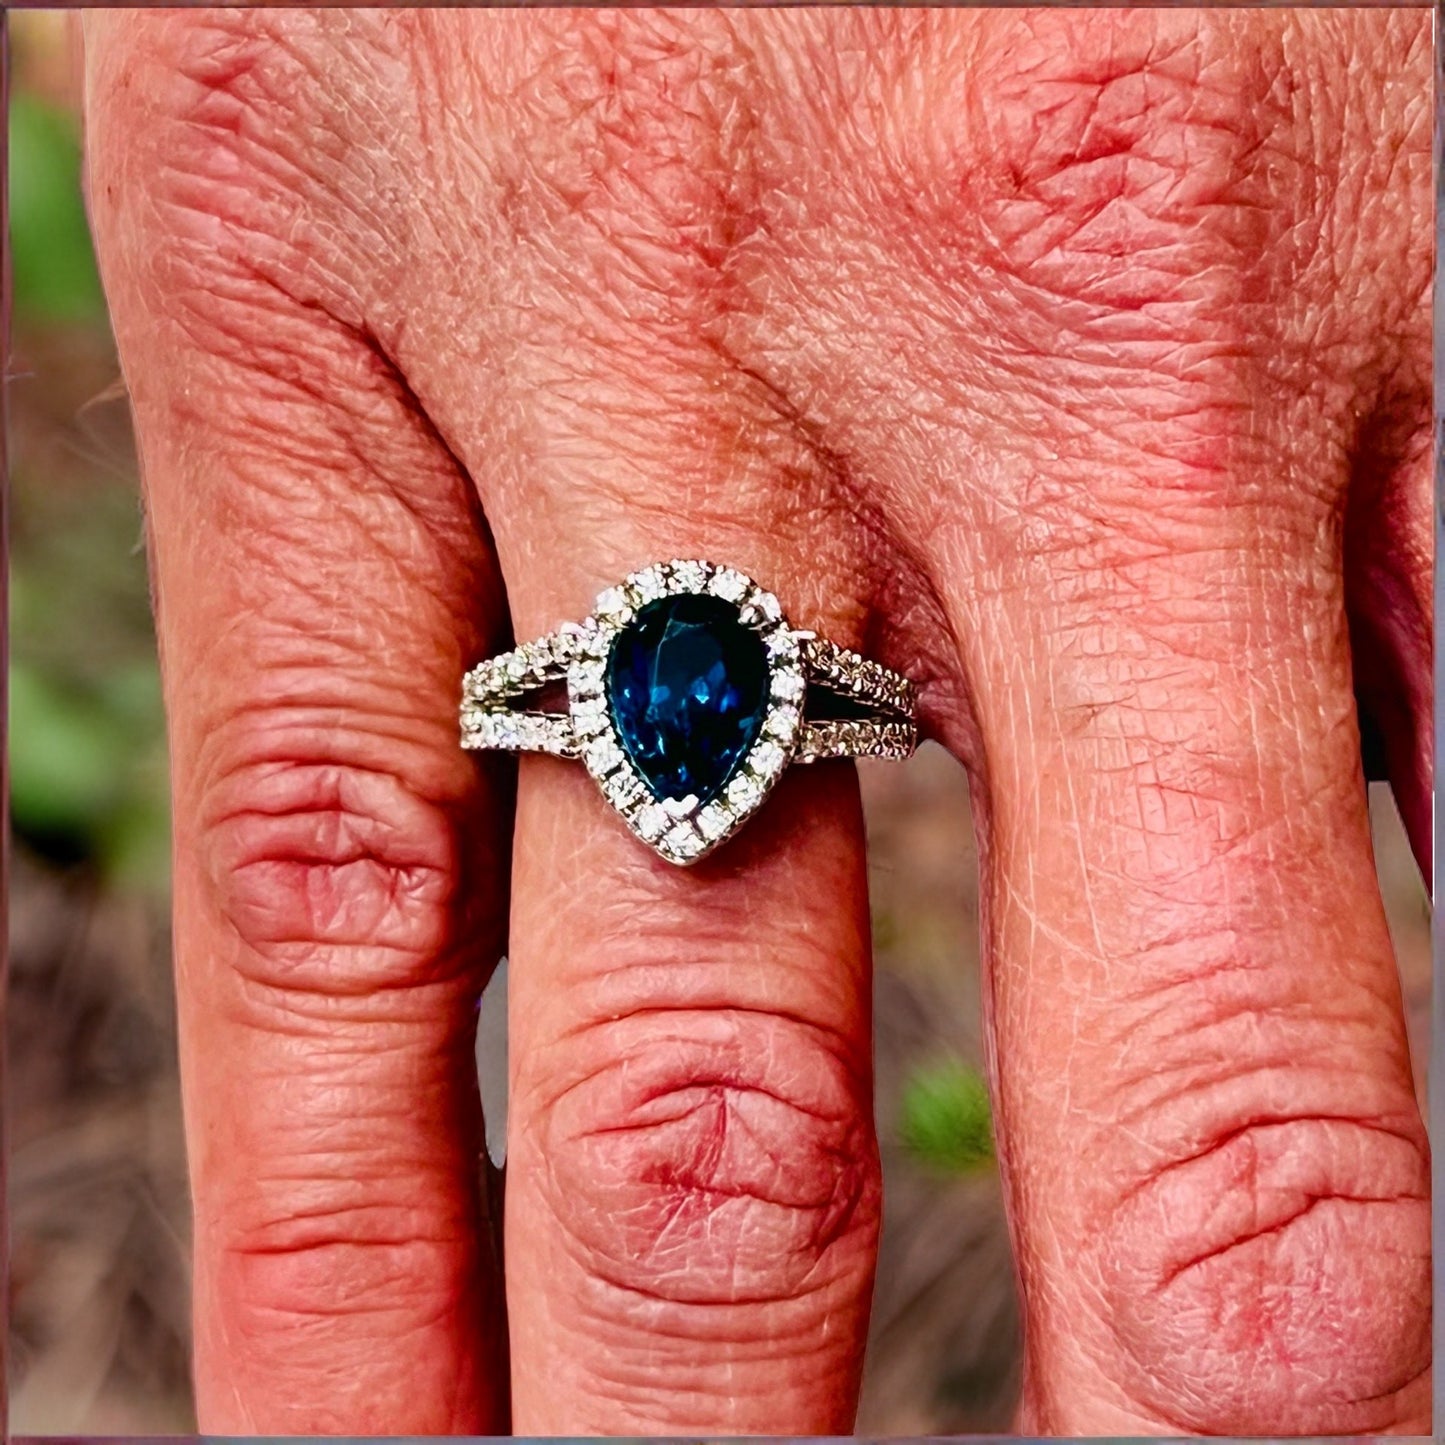 Natural Blue Topaz Diamond Ring Size 6.5 14k W Gold 3.77 TCW Certified $3,950 300213 - Certified Fine Jewelry